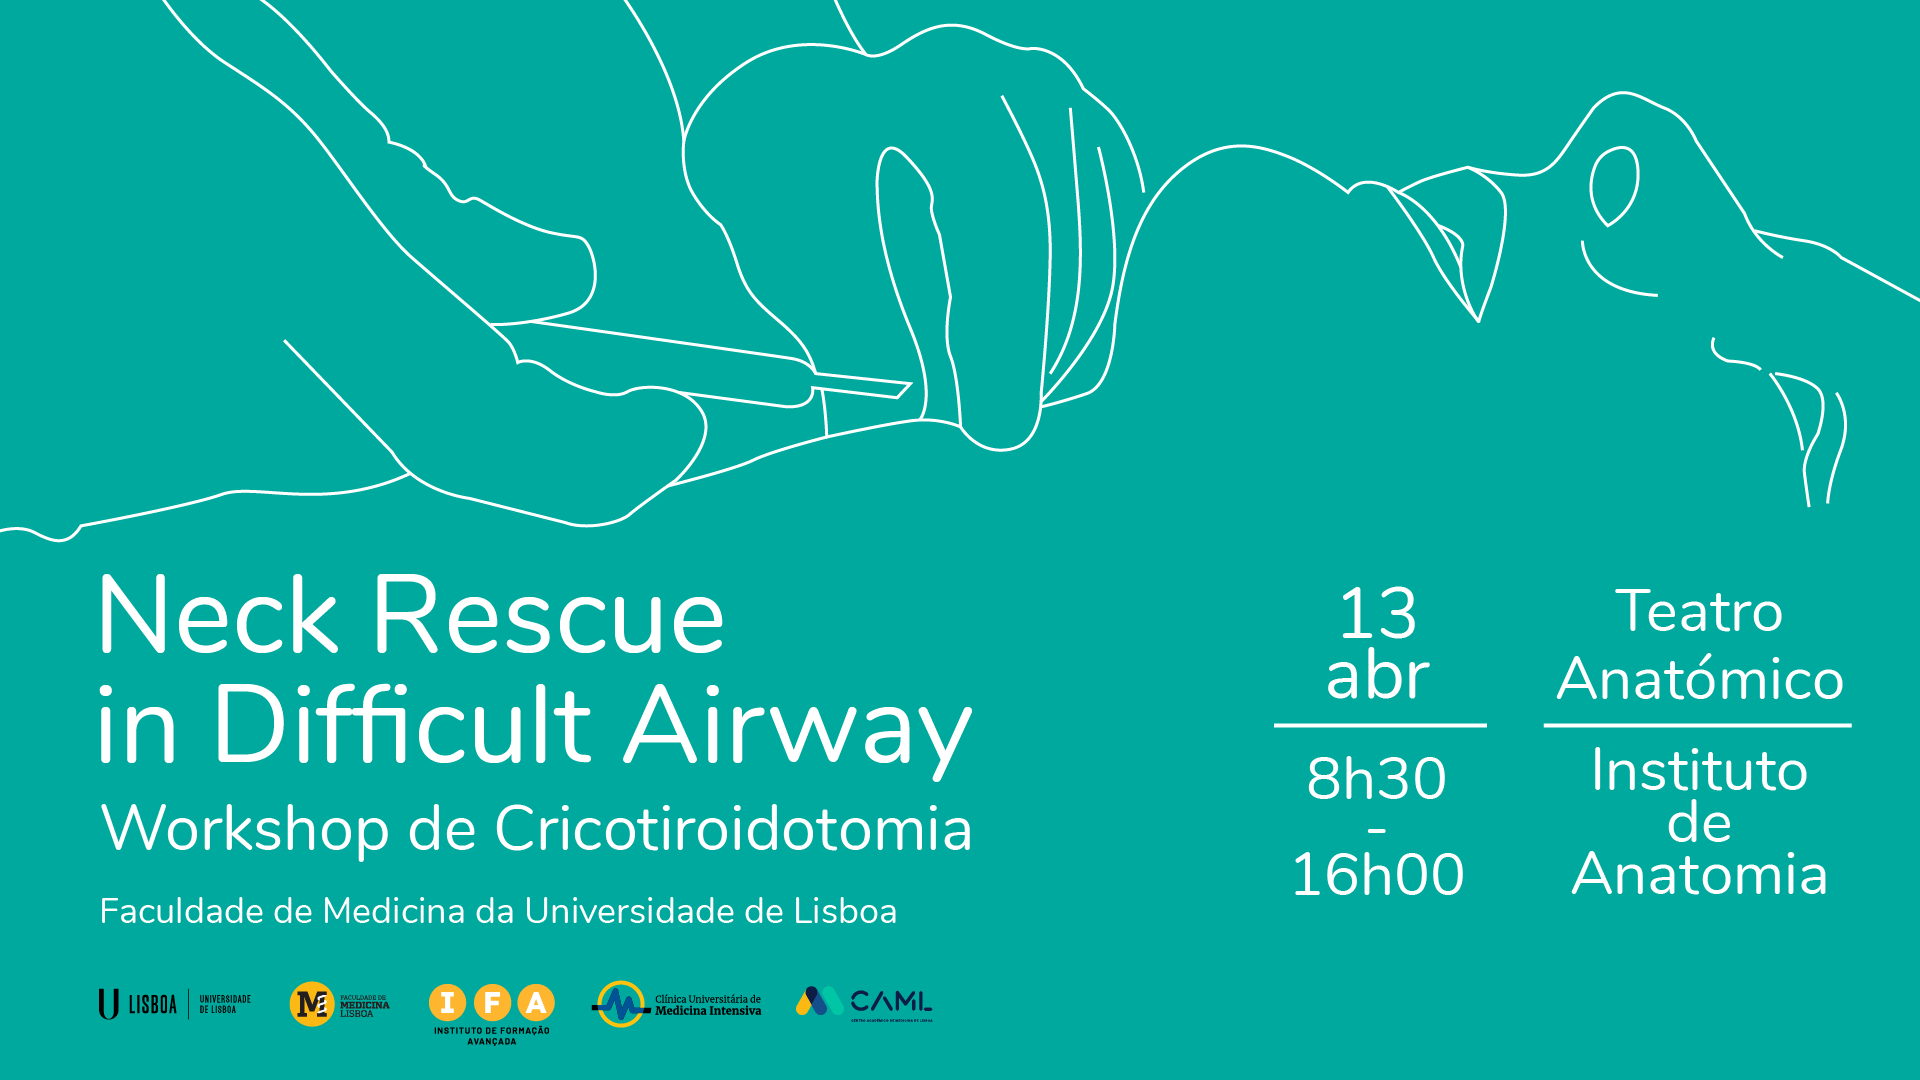 Neck Rescue in Difficult Airway, Workshop de Cricotiroidotomia